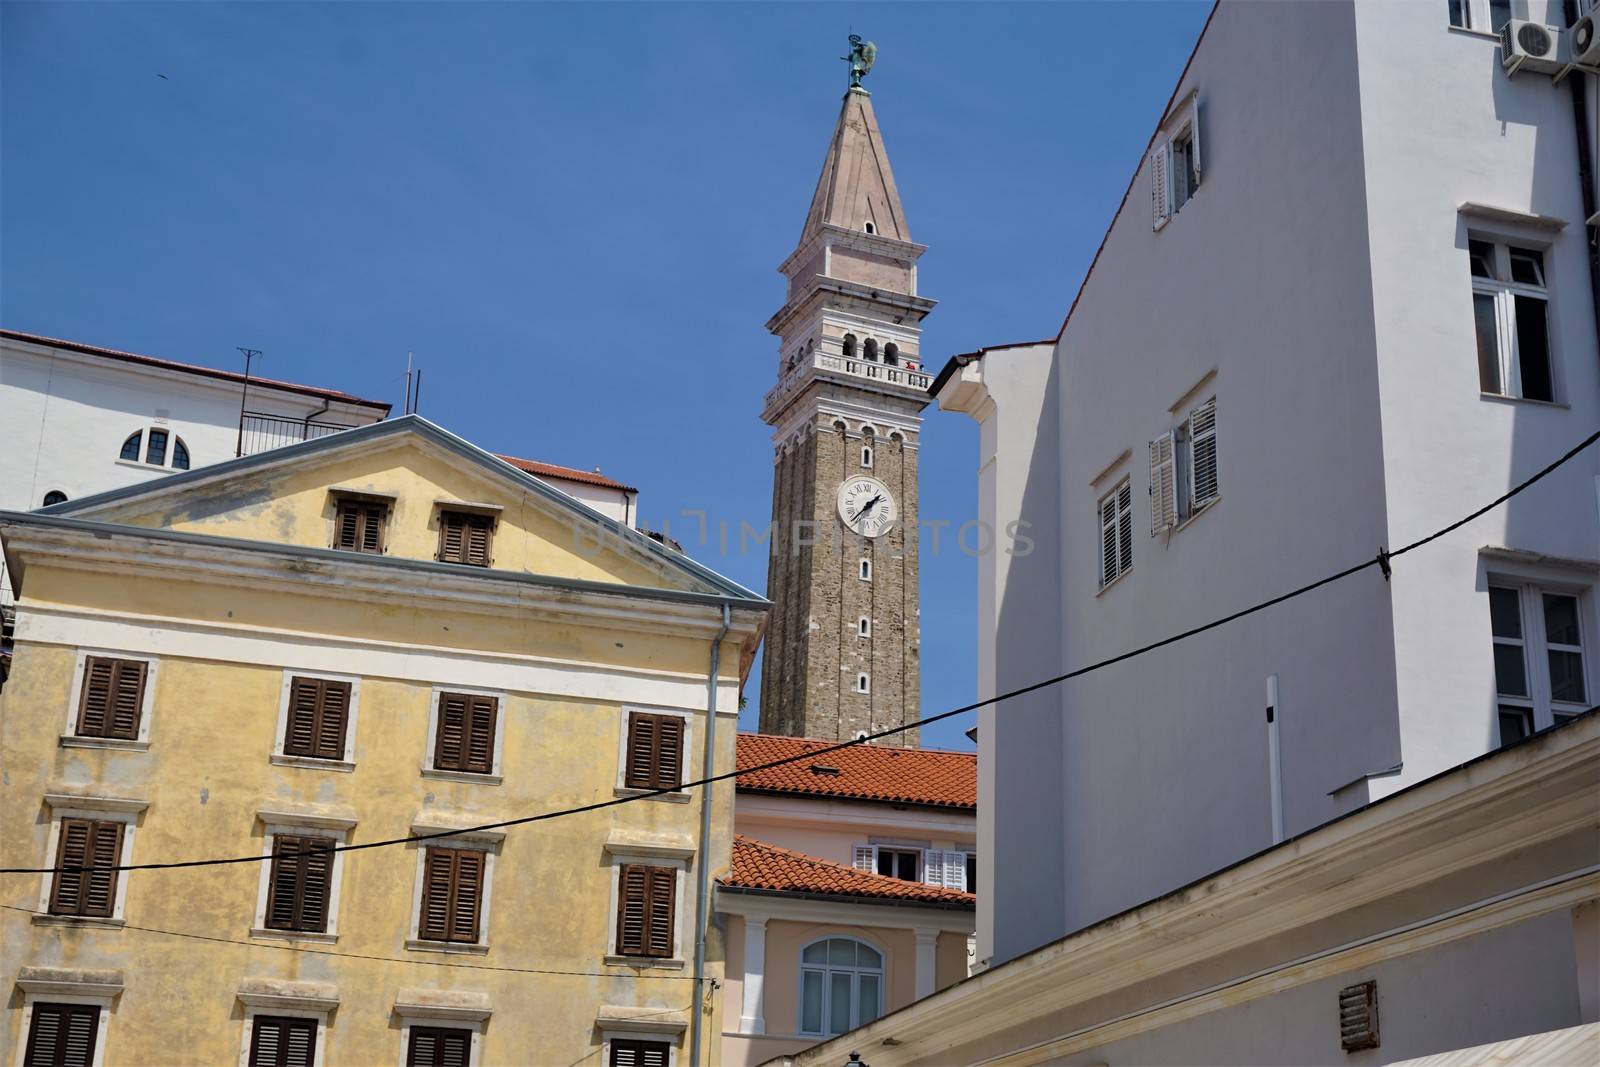 The campanile bell tower of Piran, Slovenia